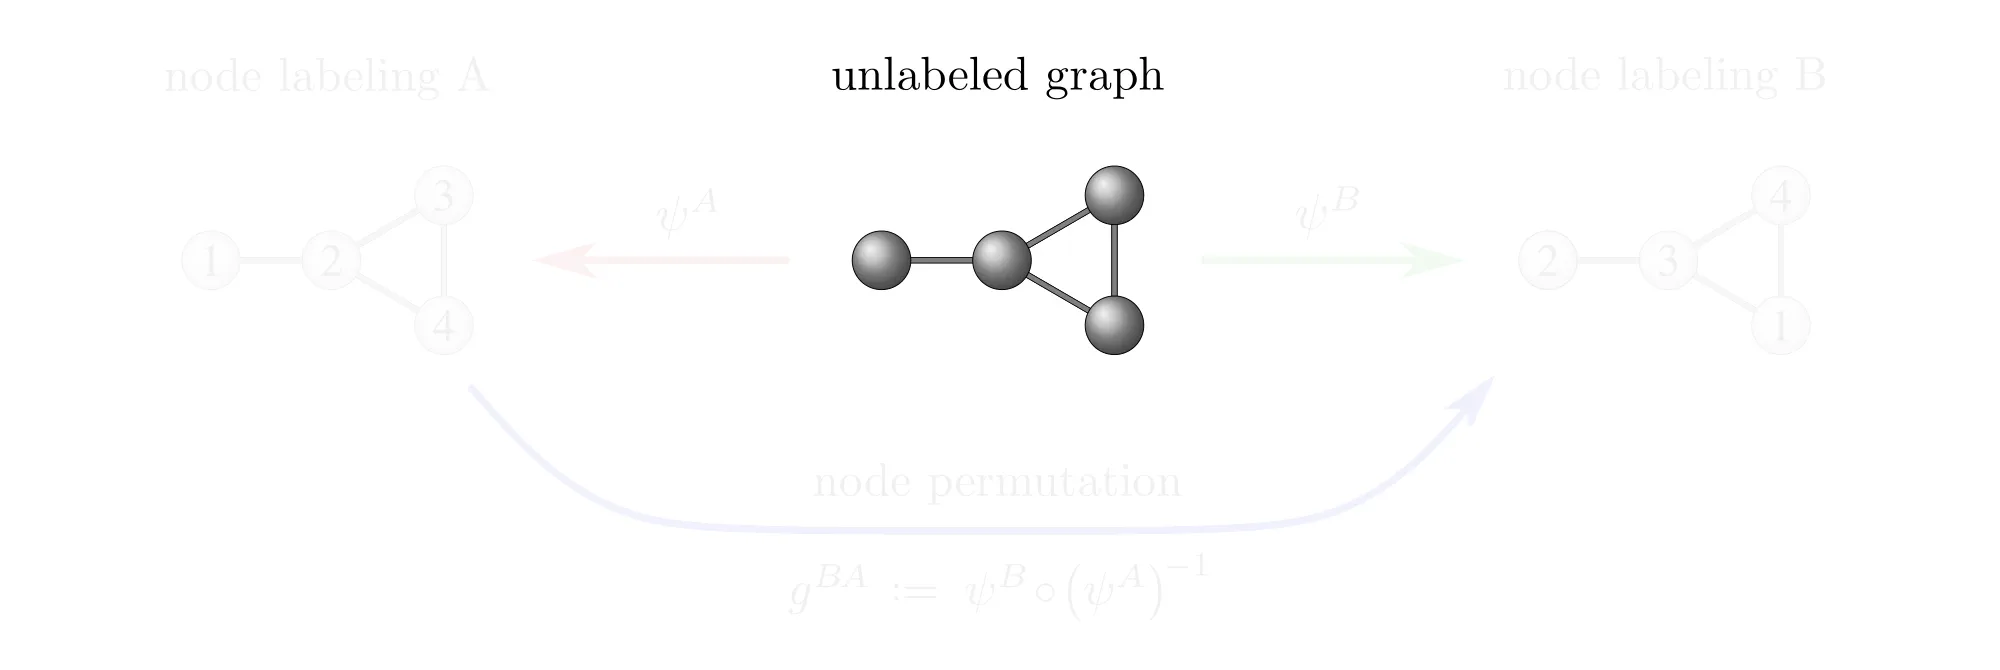 Gauging of graph vertices, slide 1